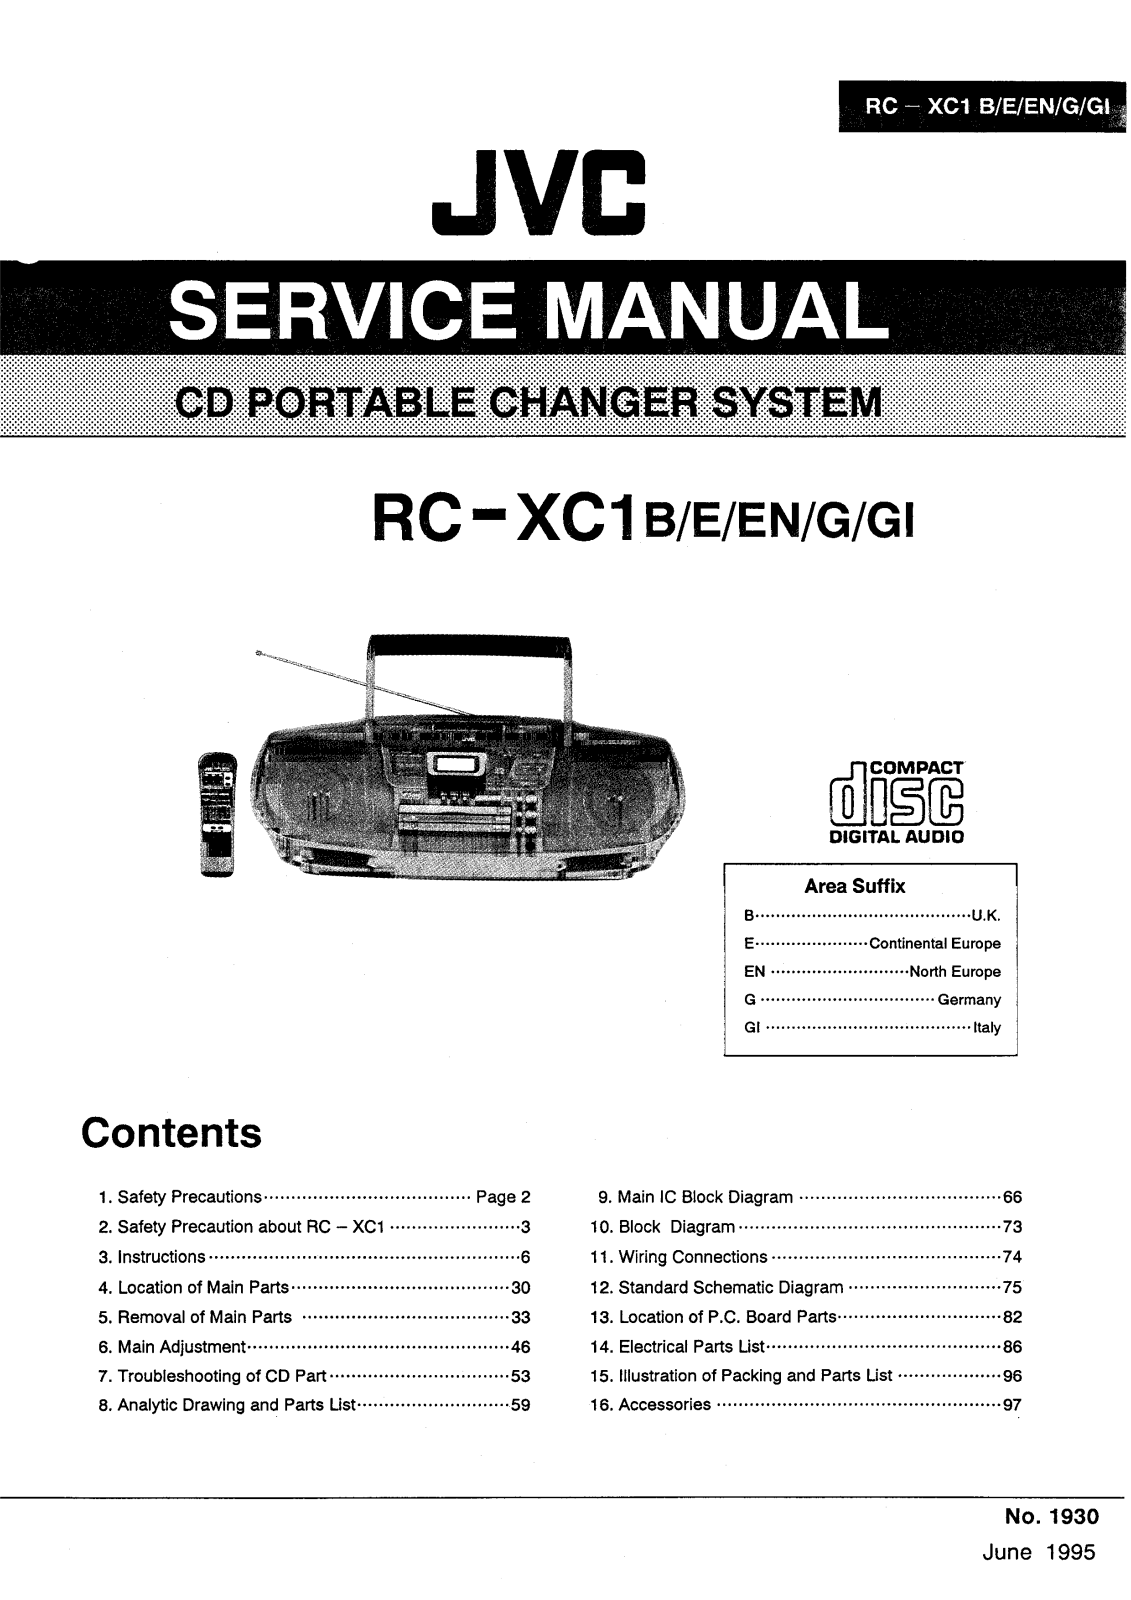 JVC RC-XC1B, RC-XC1E, RC-XC1EN, RC-XC1G, RC-XC1GI Service Manual